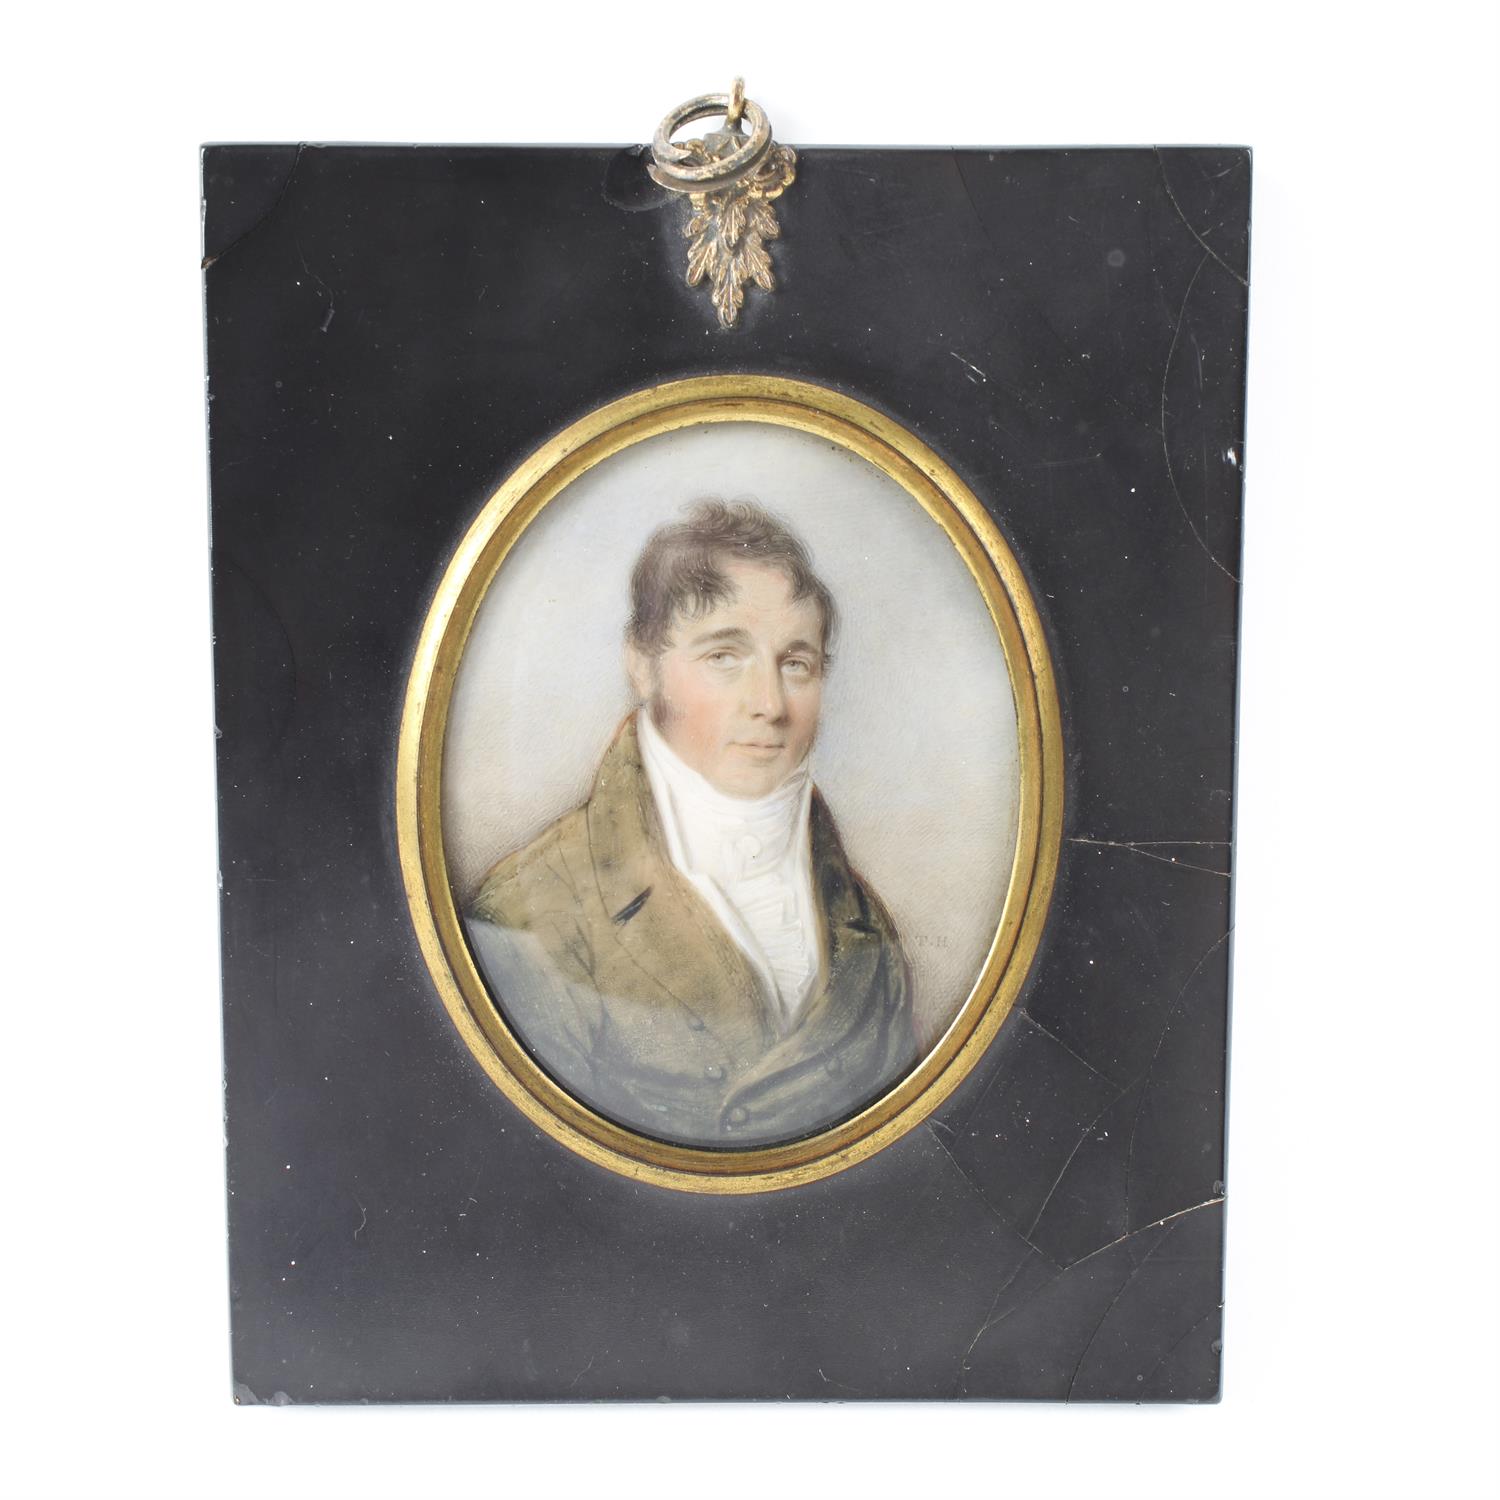 Attributed of Thomas Hazelhurst portrait miniature